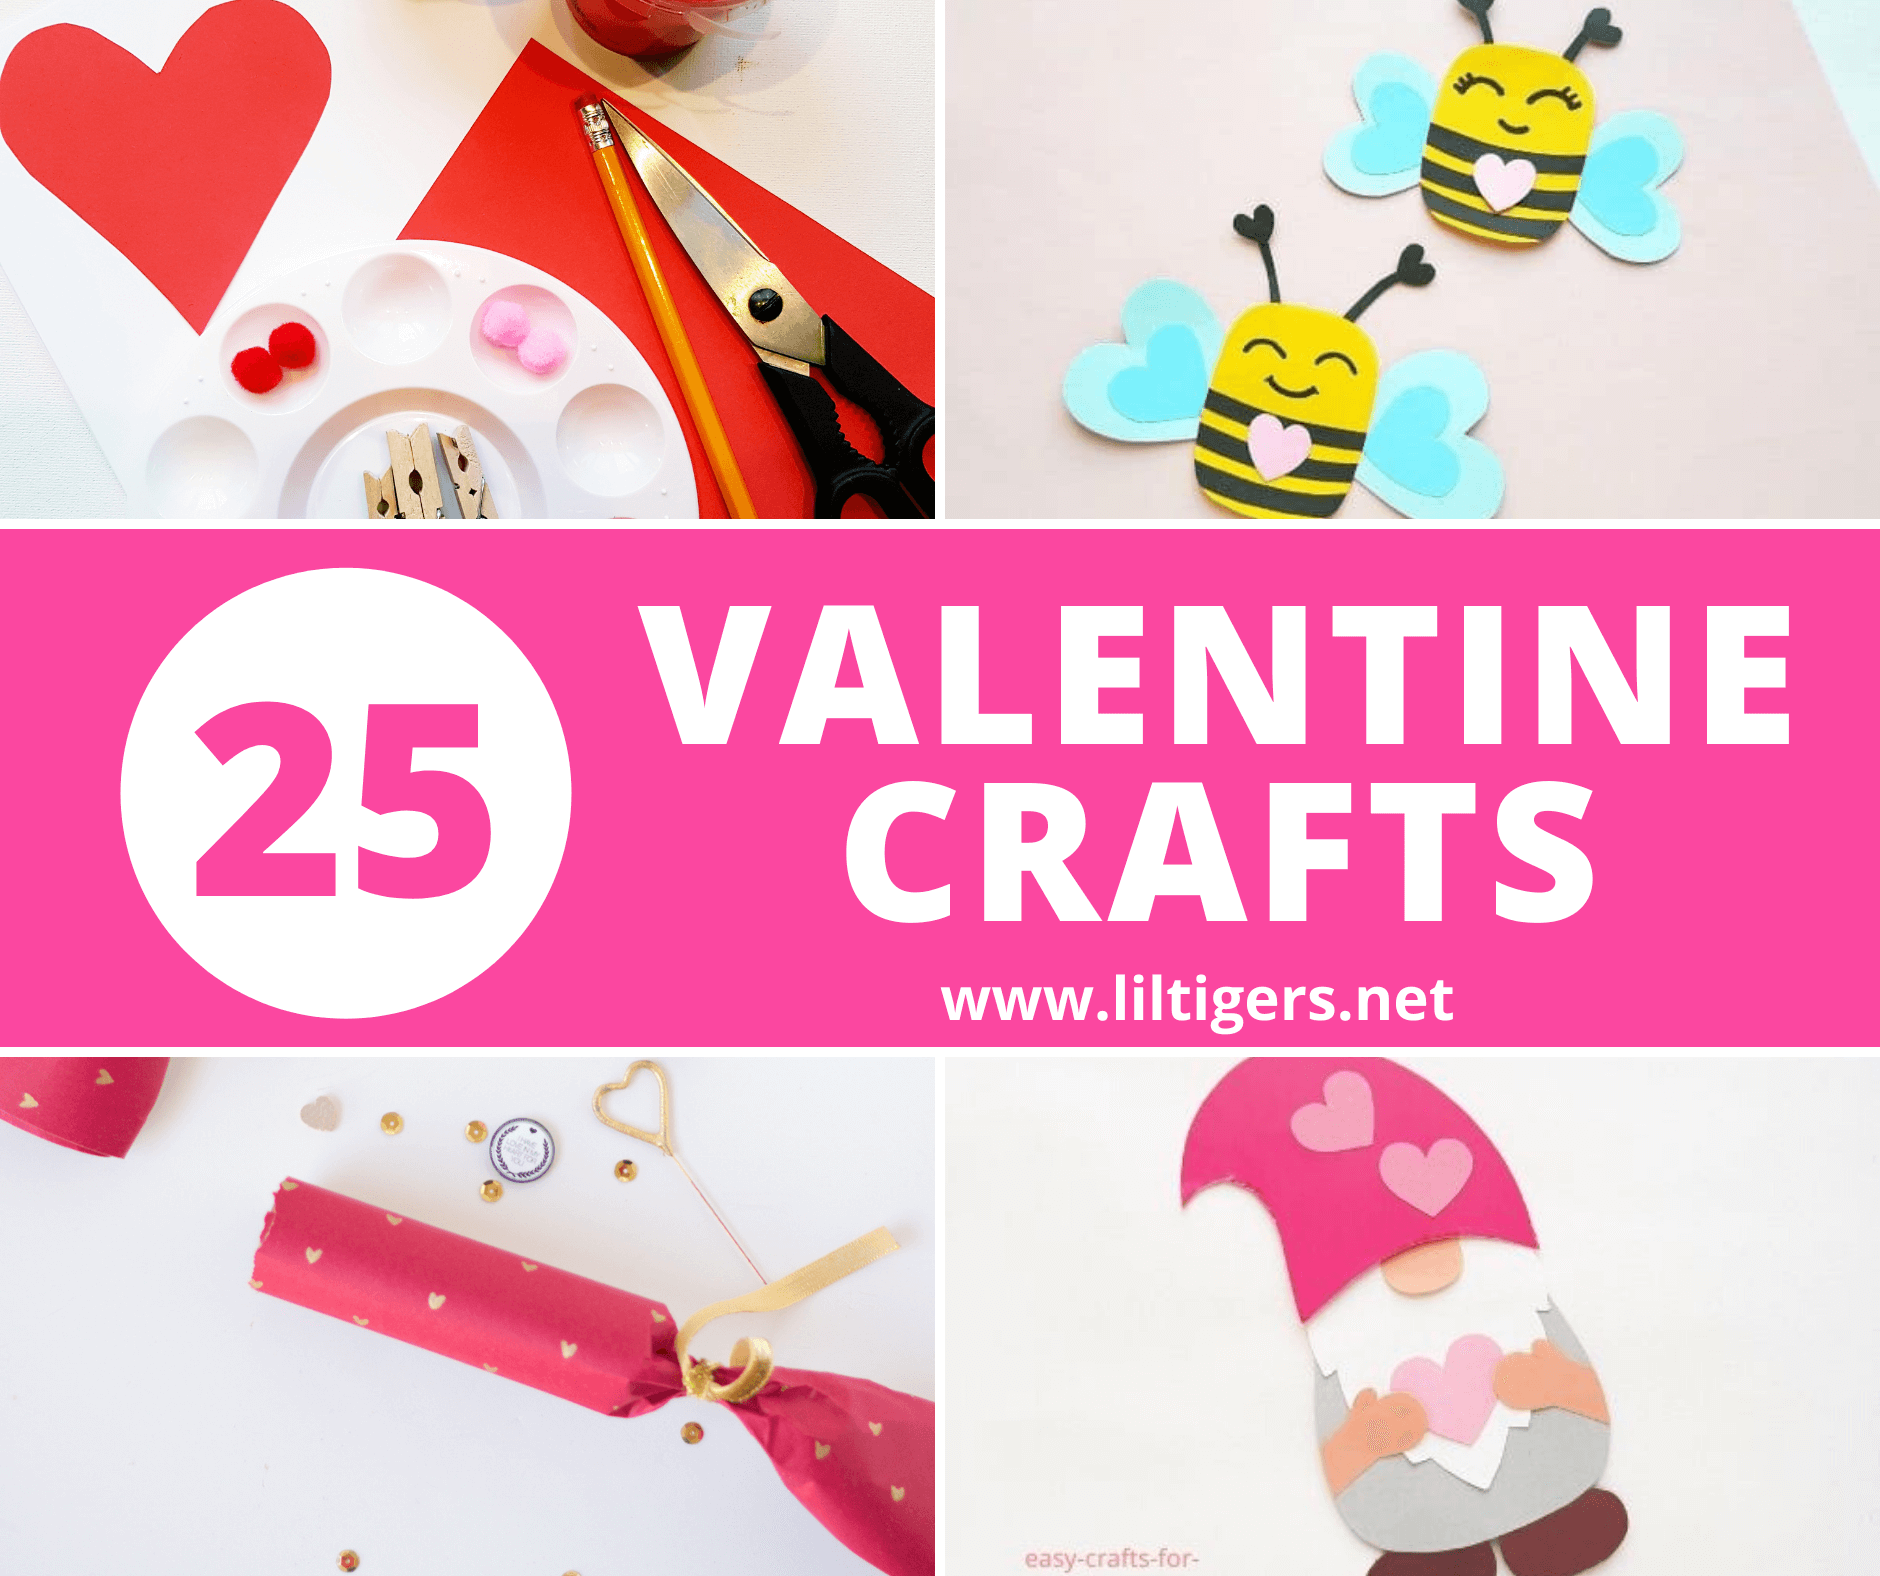 Valentines day crafts for kids